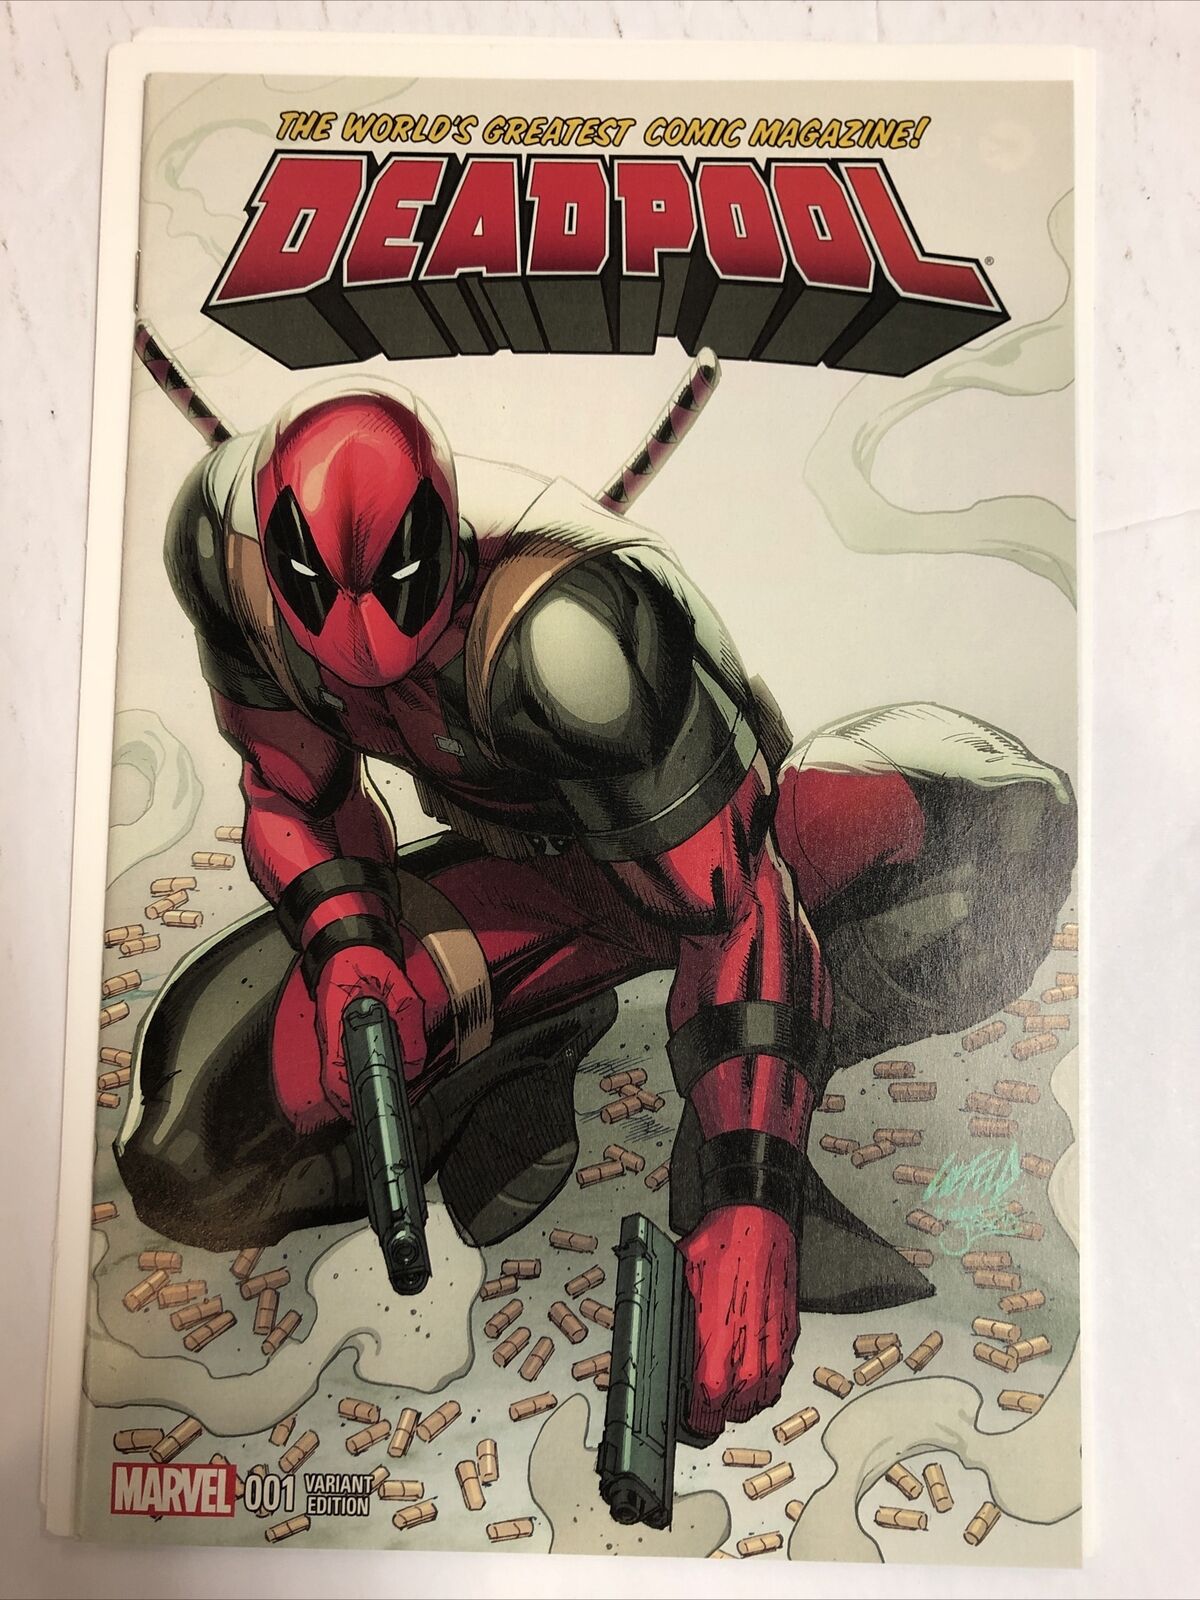 Deadpool (2016) # 1 (VF/NM) Liefeld Comicbook.com Variant Cover